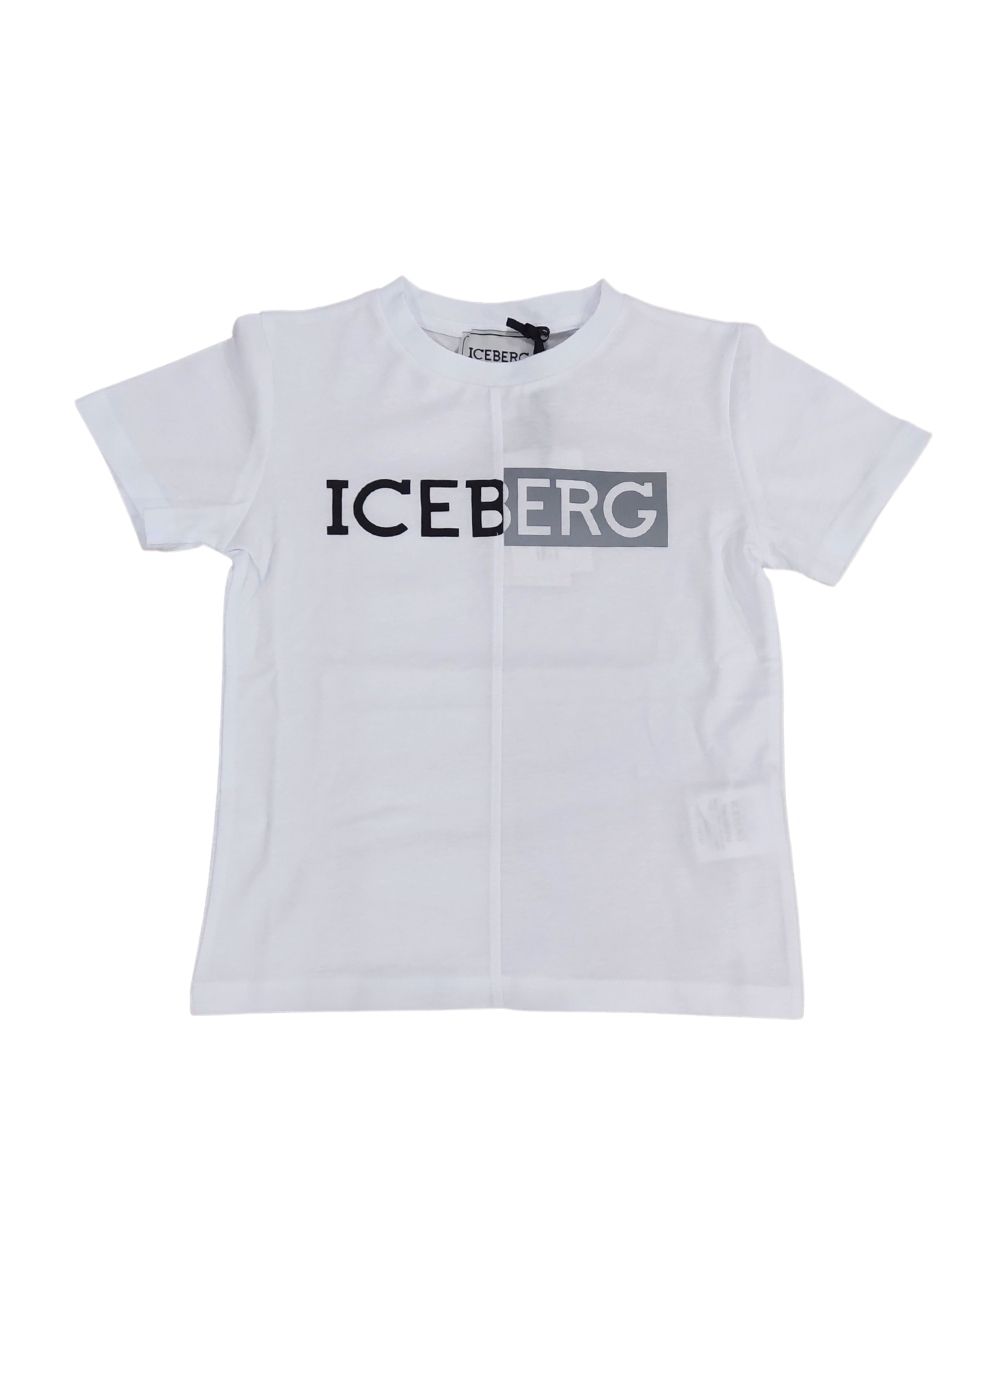 Featured image for “Iceberg T-shirt Logo”